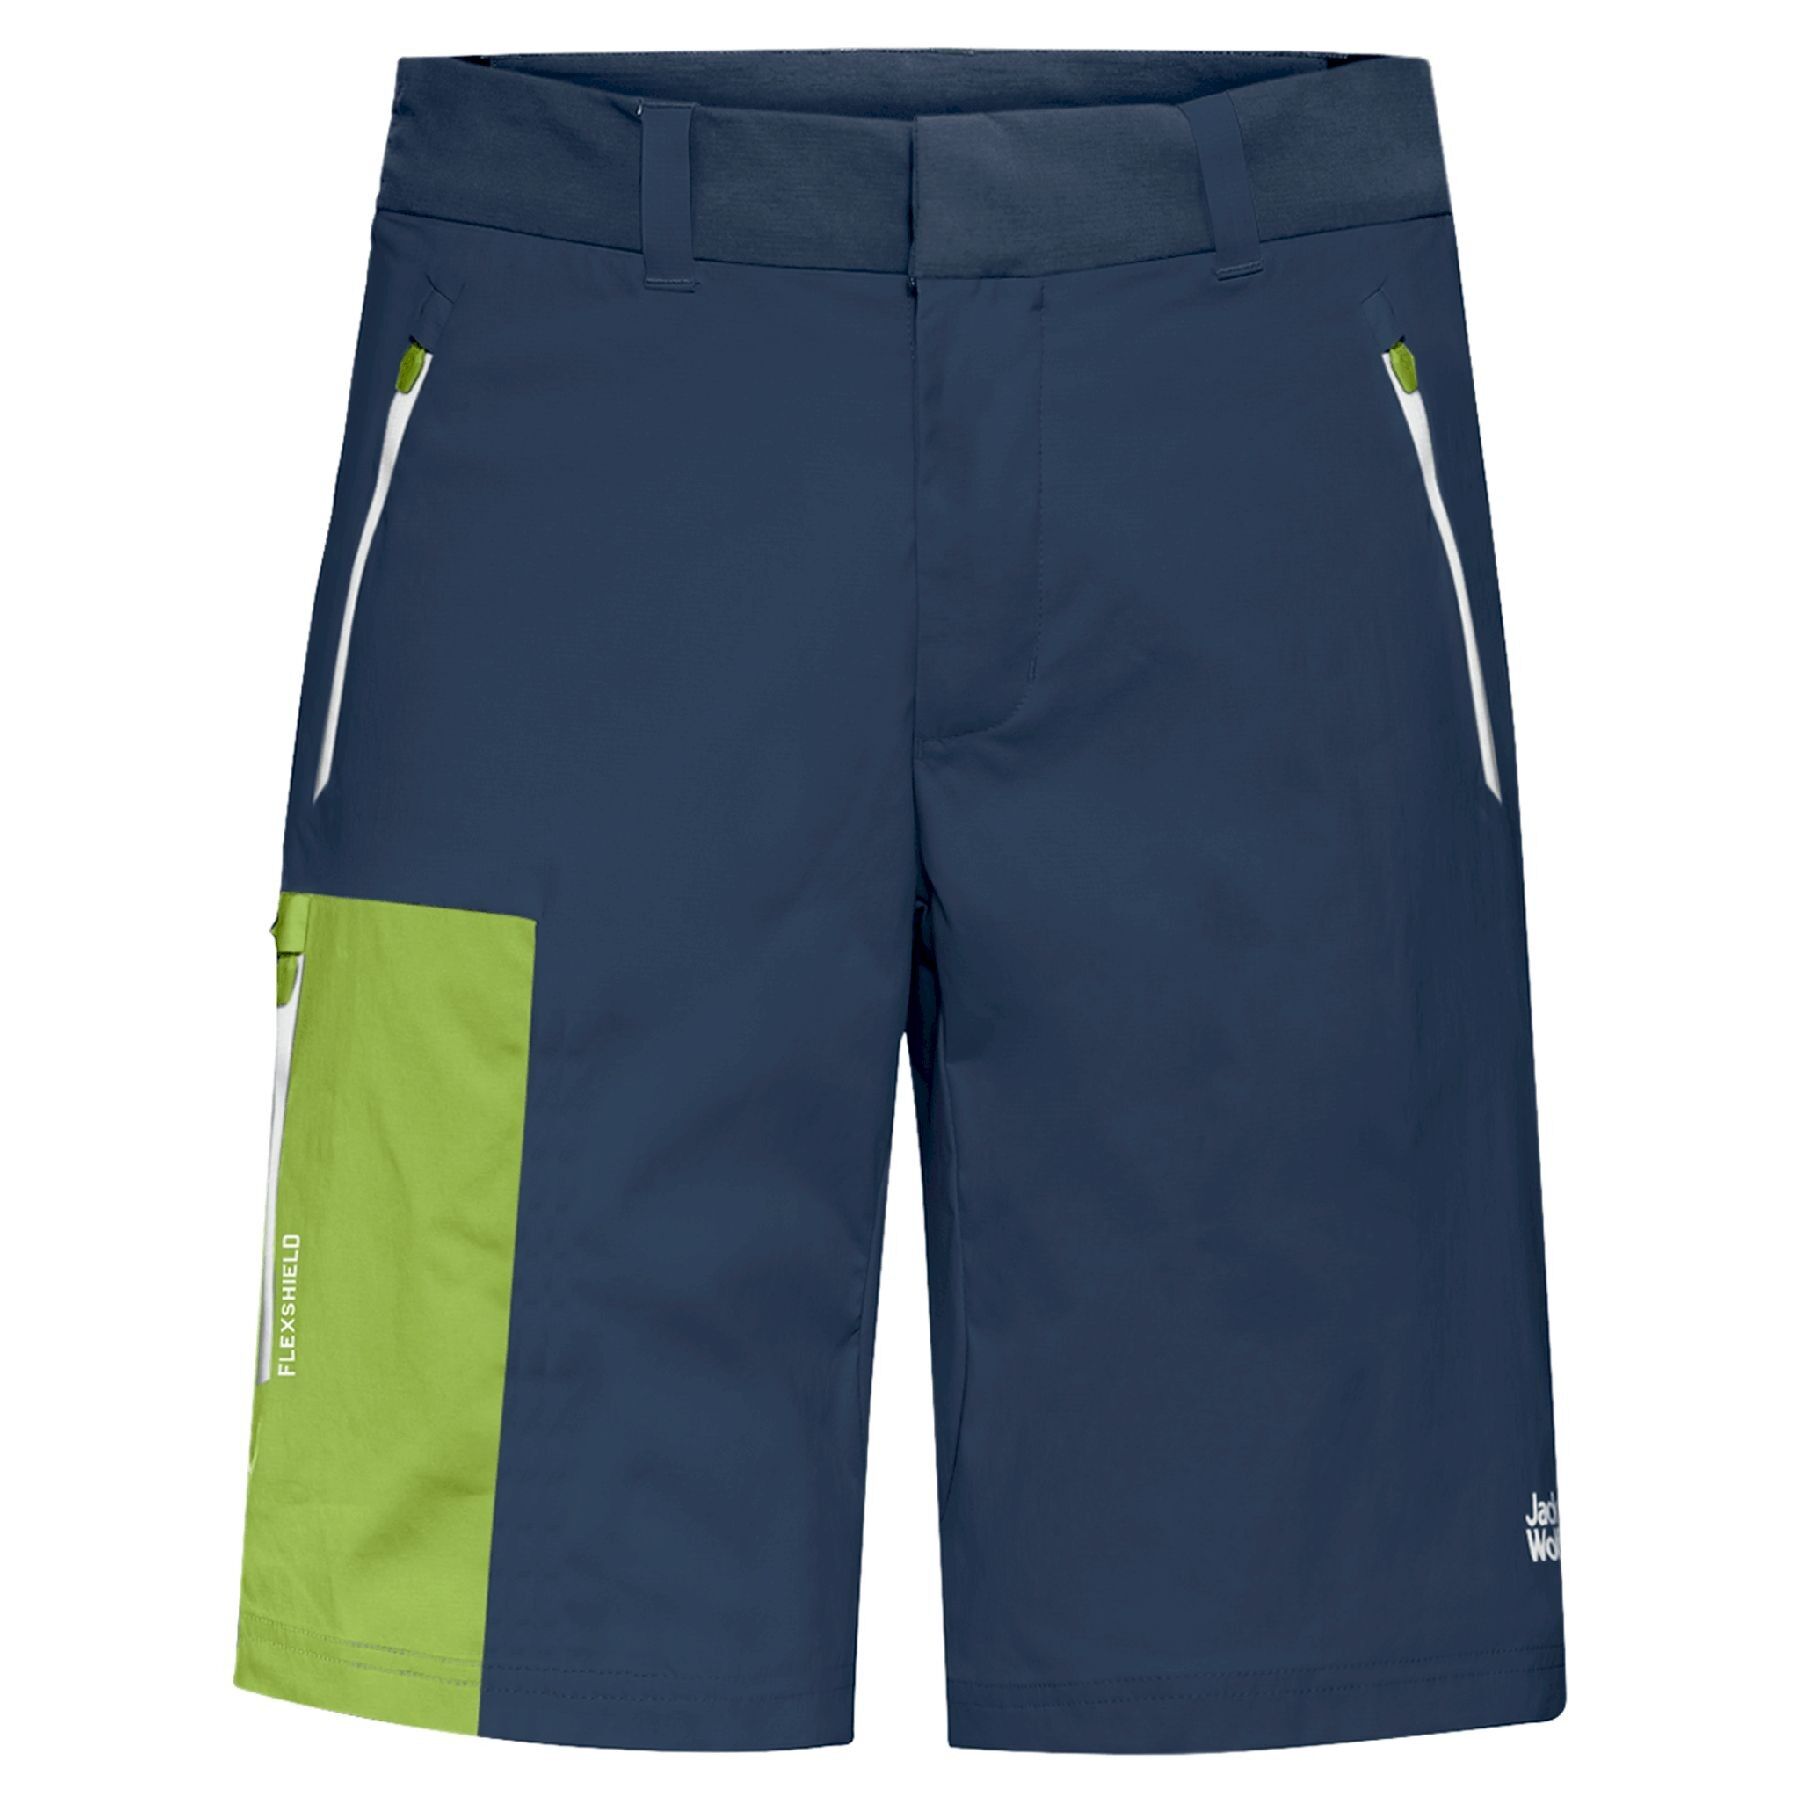 Jack Wolfskin Overland Shorts - Walking shorts - Men's